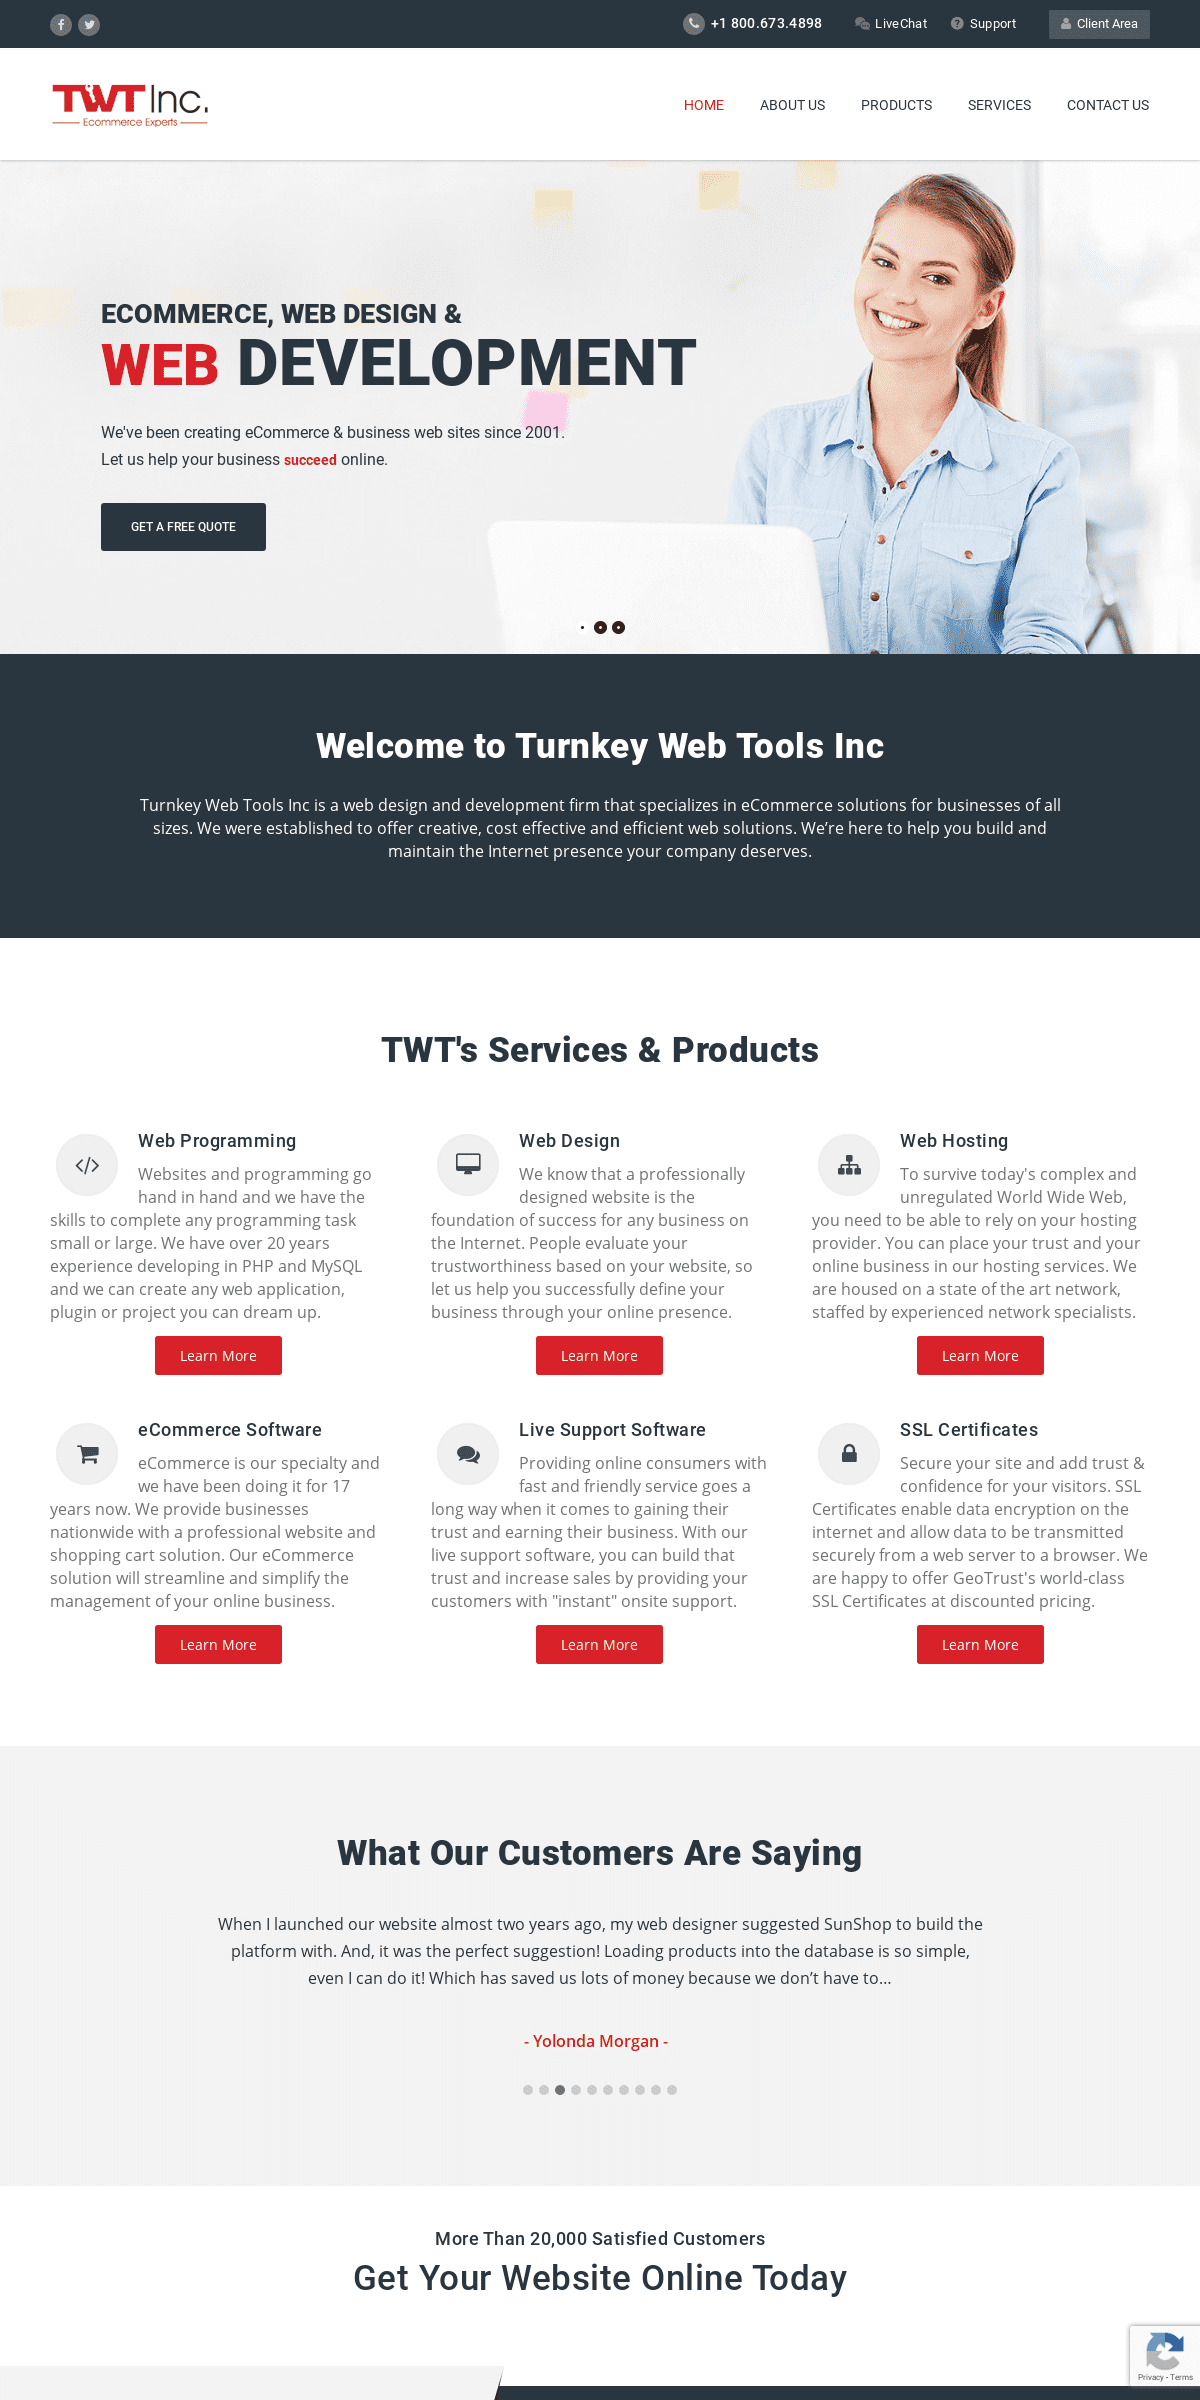 A complete backup of twt-inc.com